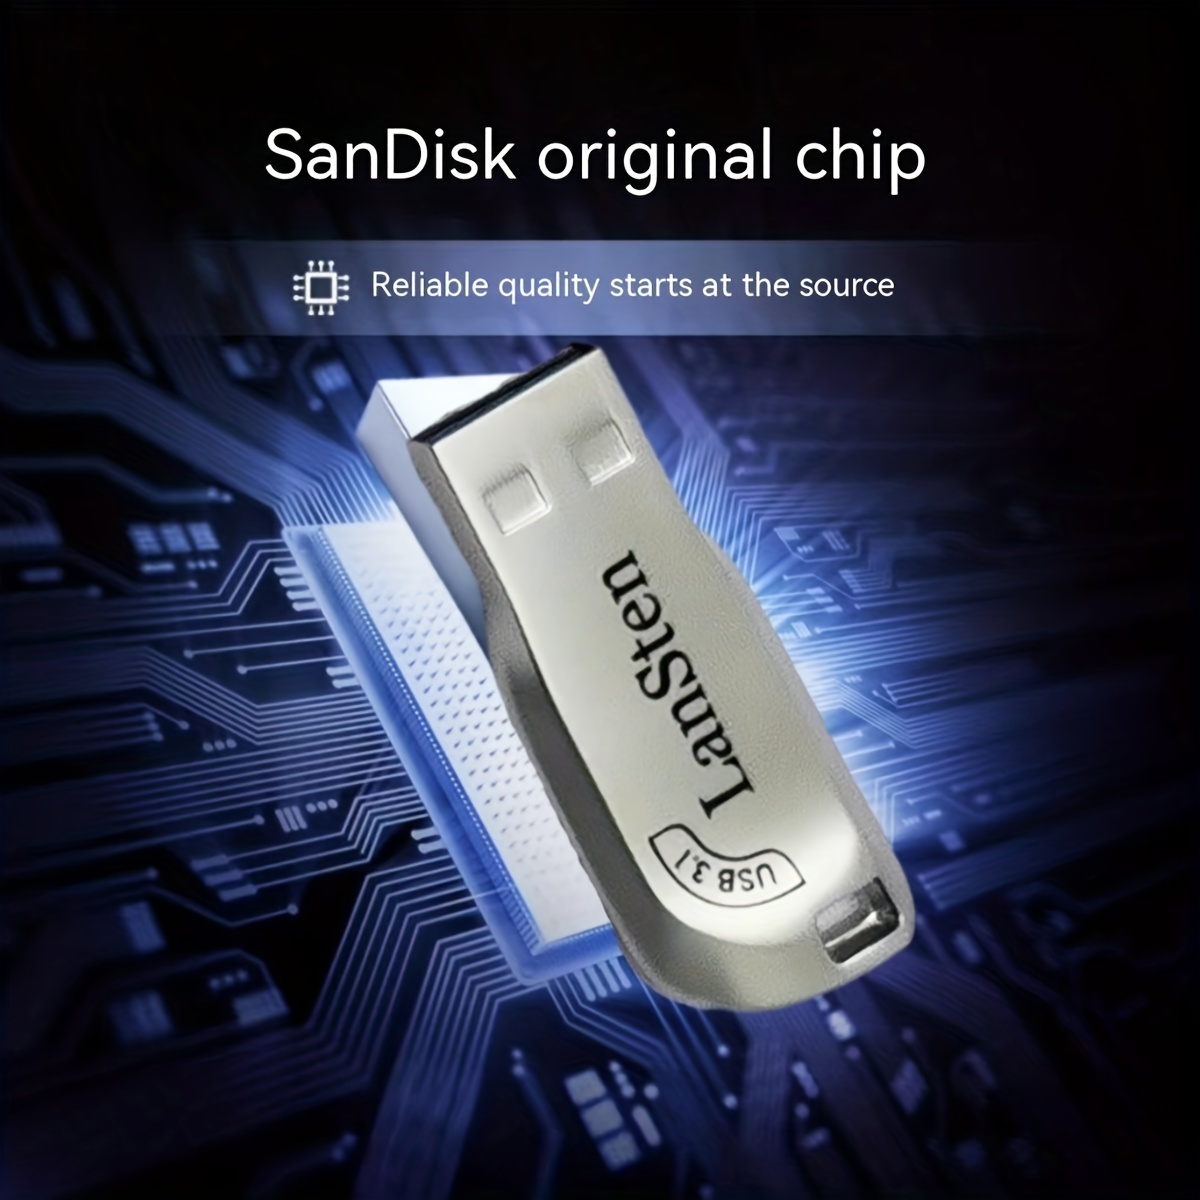 SANDISK PENDRIVE 128GB ULTRA SHIFT USB 3.0 FLASH DRIVE